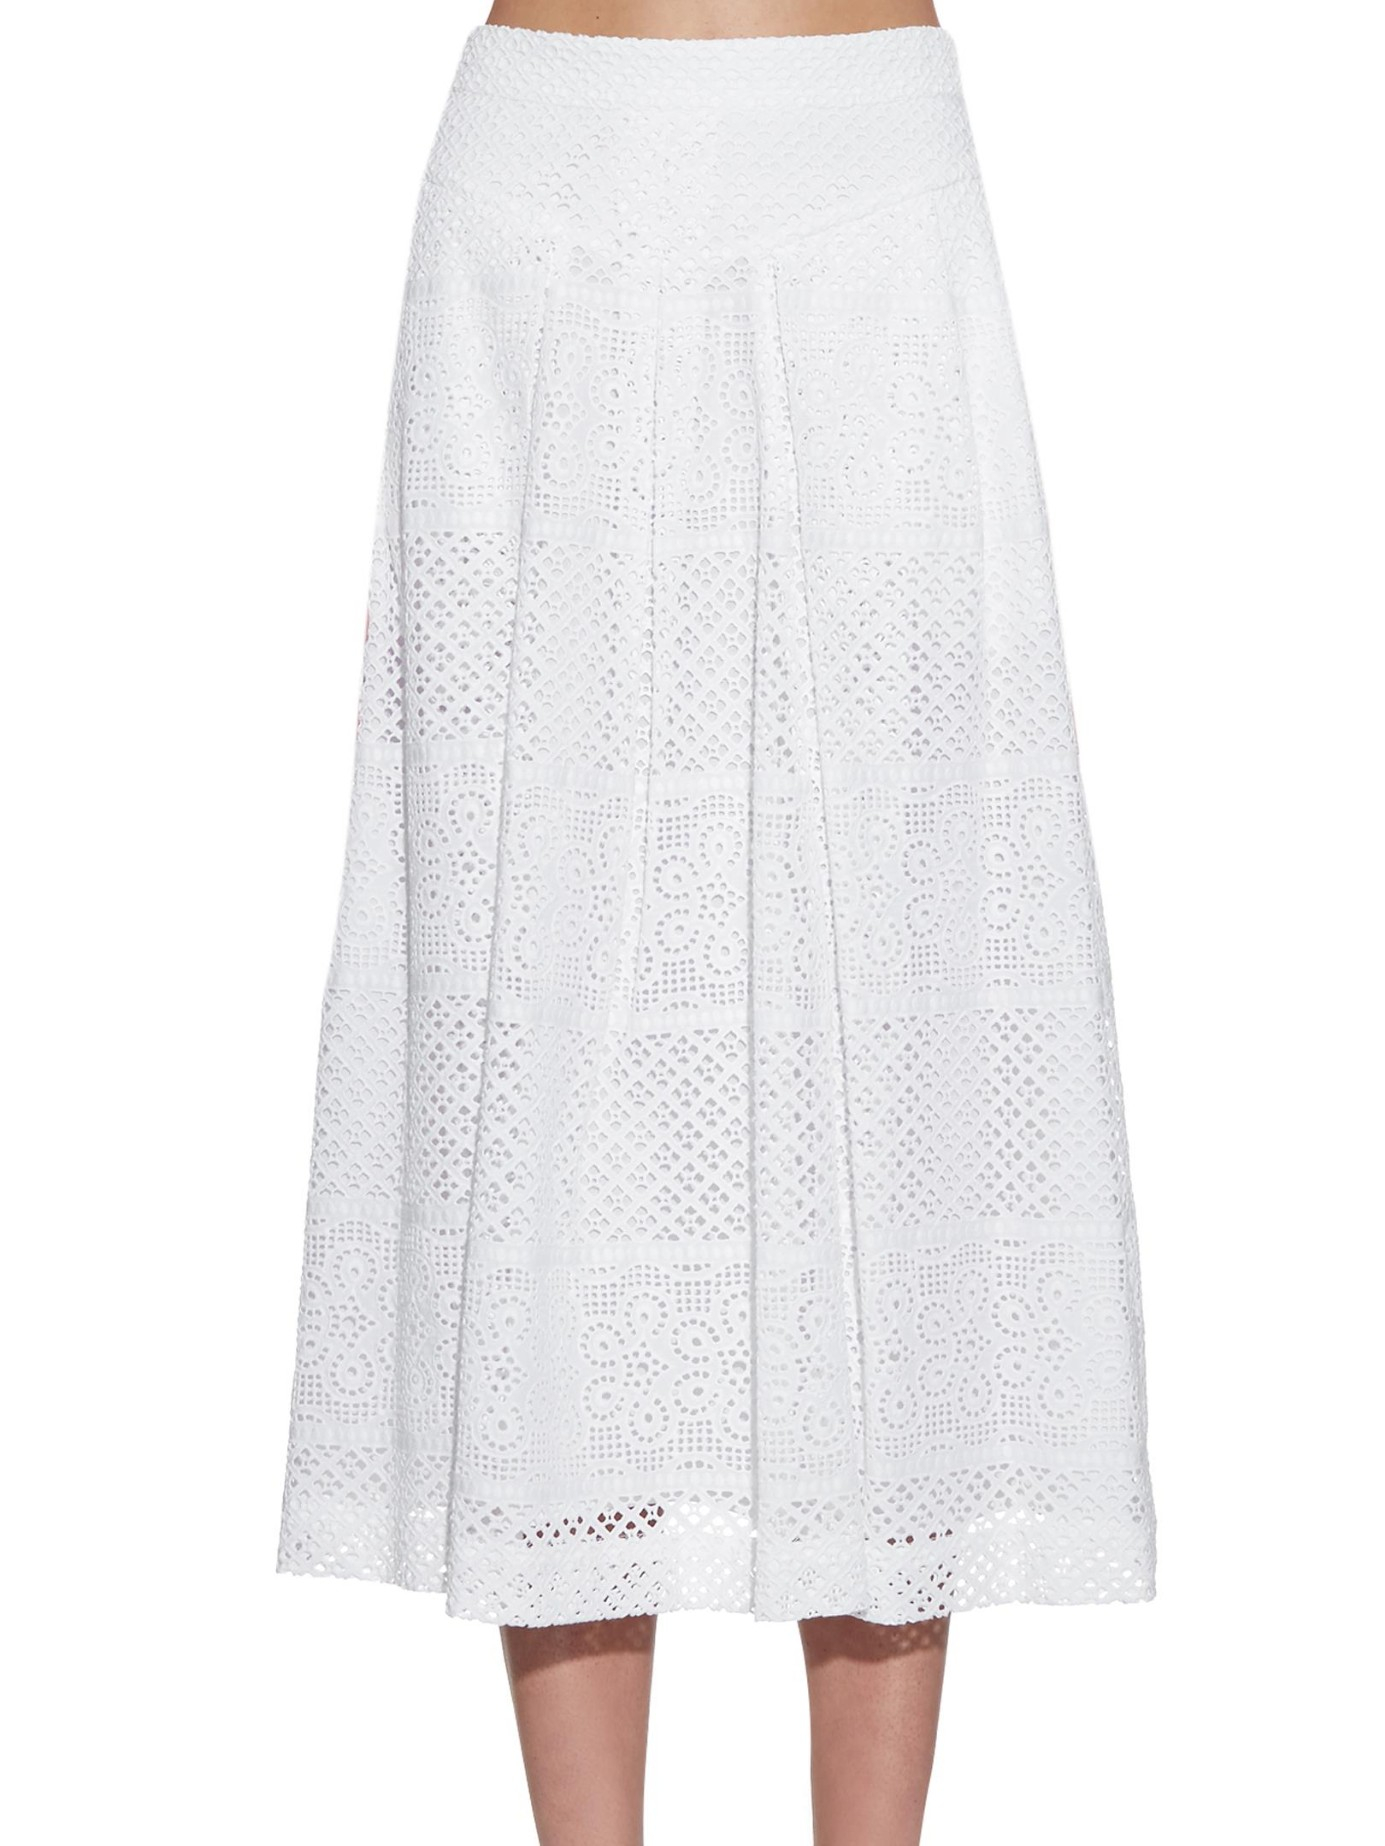 Lyst - Rebecca Taylor Masie Eyelet Skirt in White